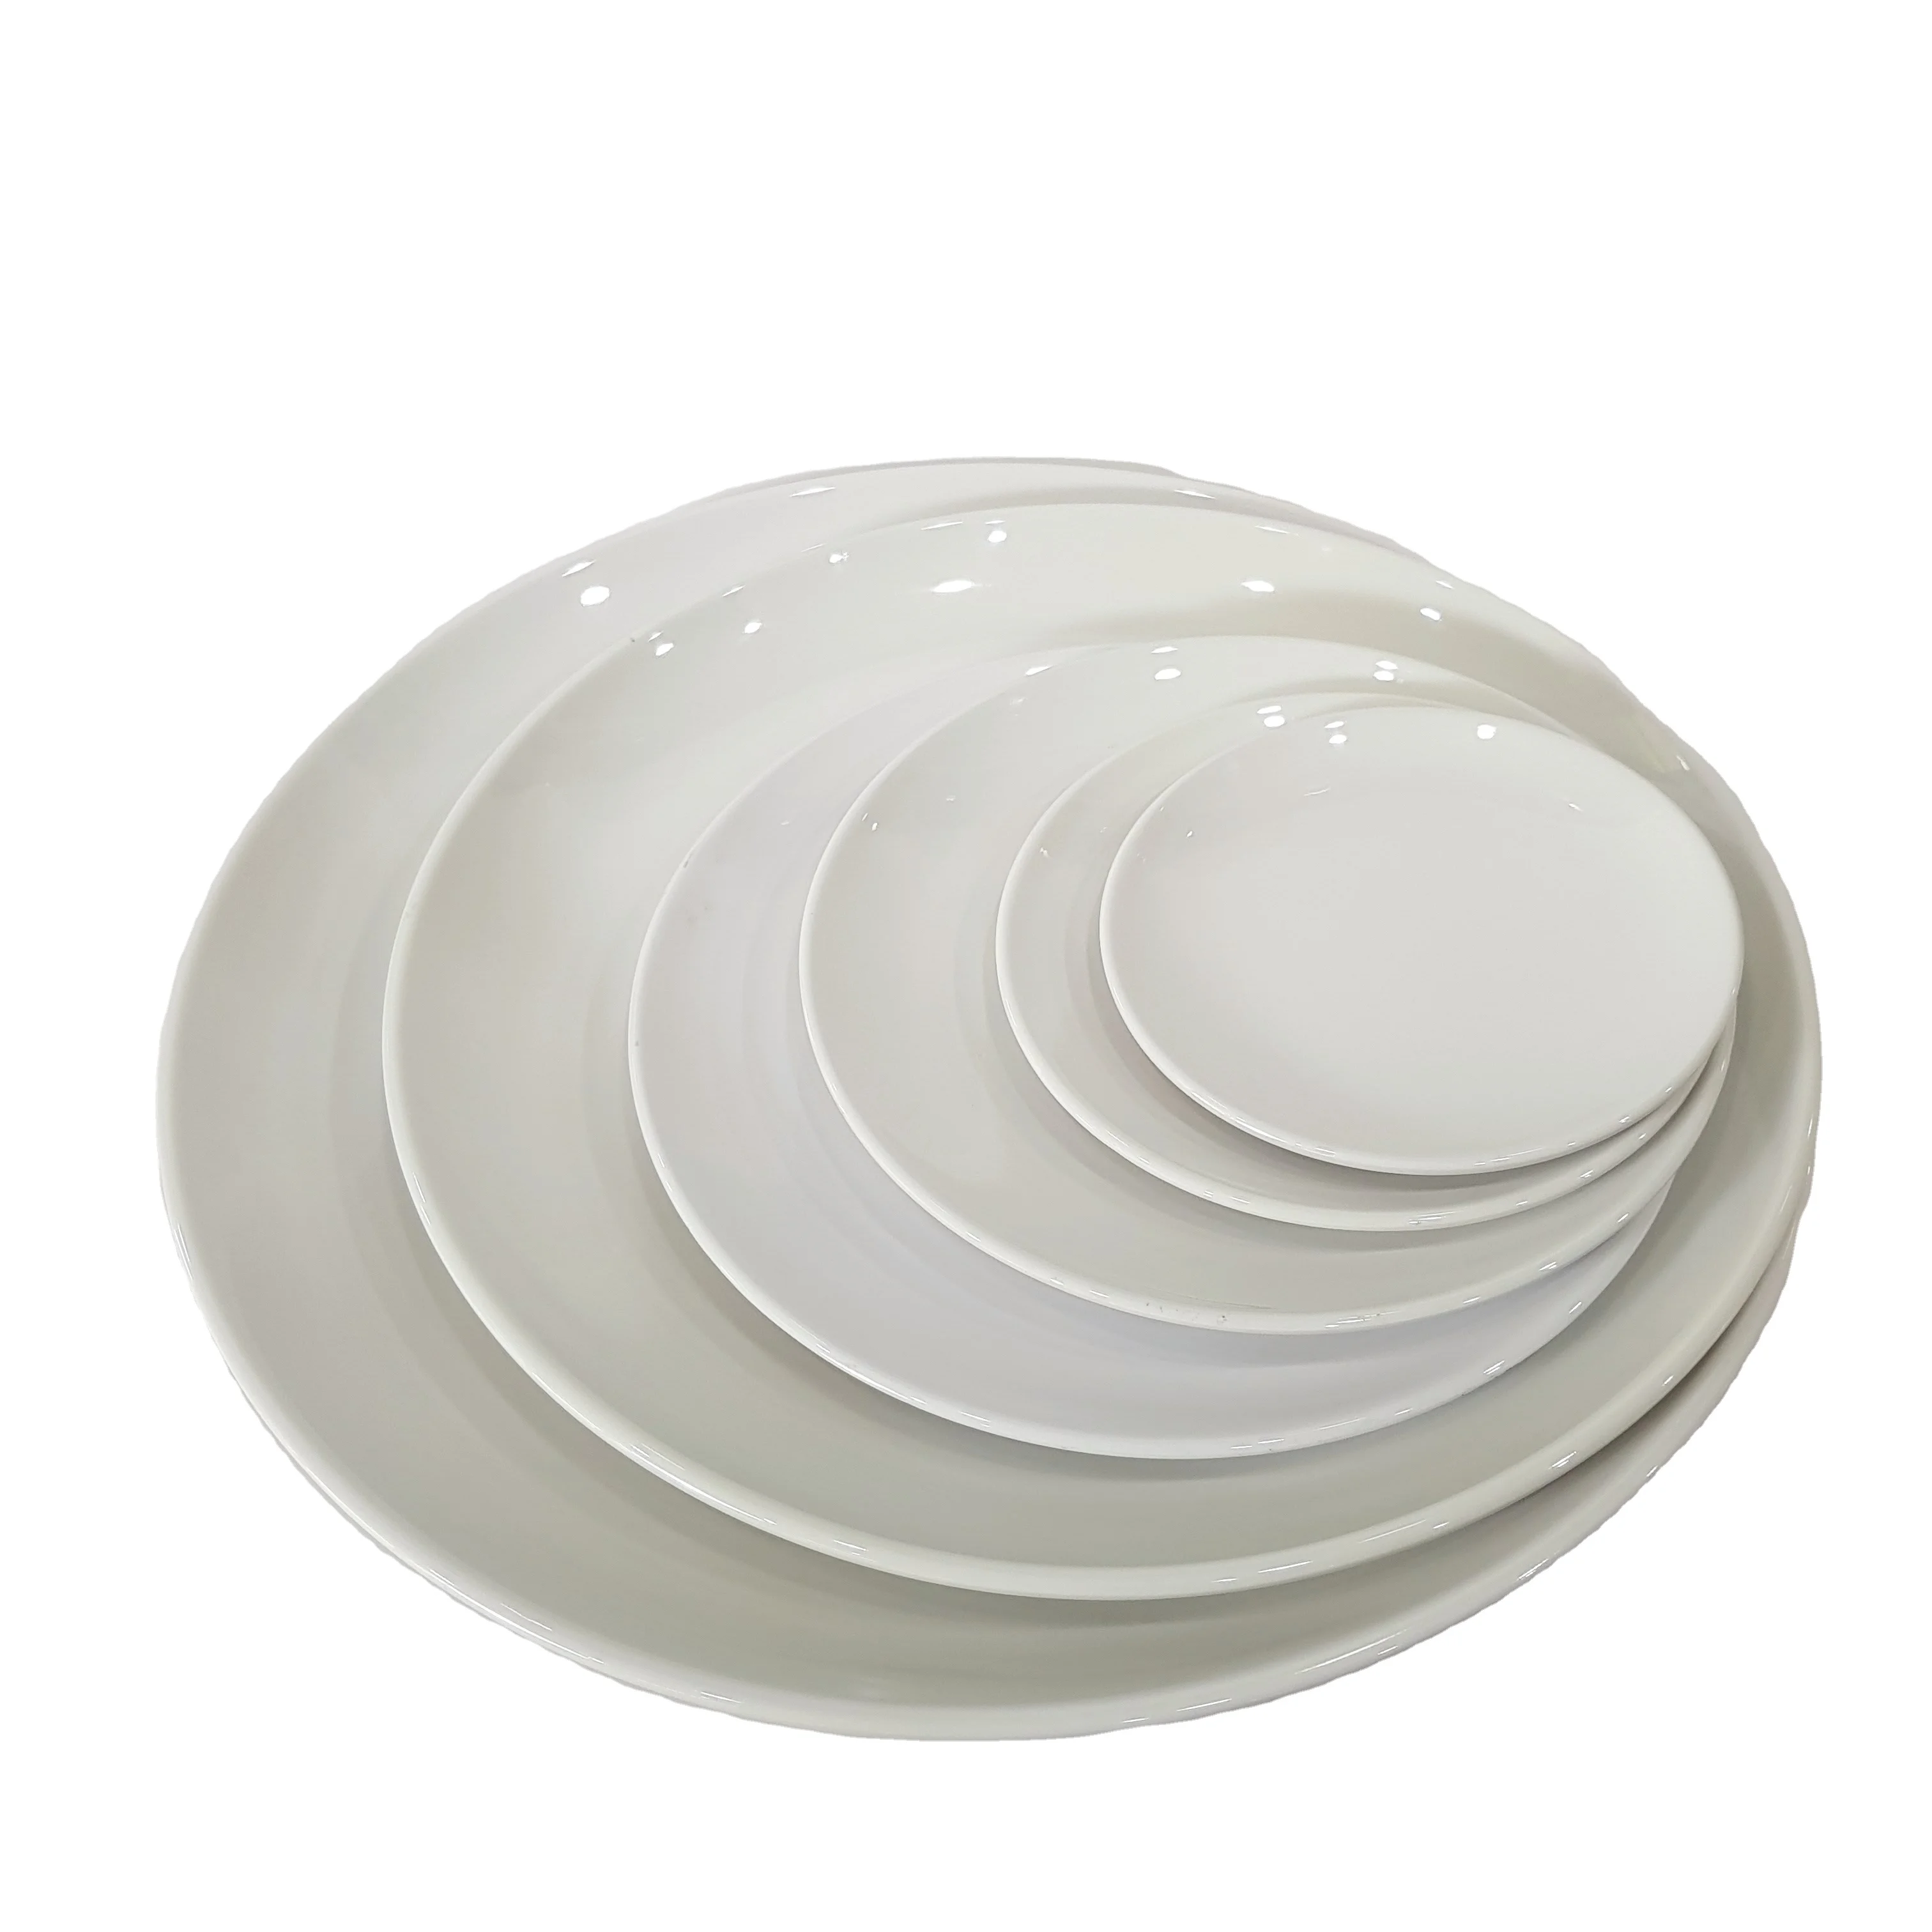 

European Clear melamine Tableware Wedding plates modern design kitchen Plates perfect for restaurant, Multicolor